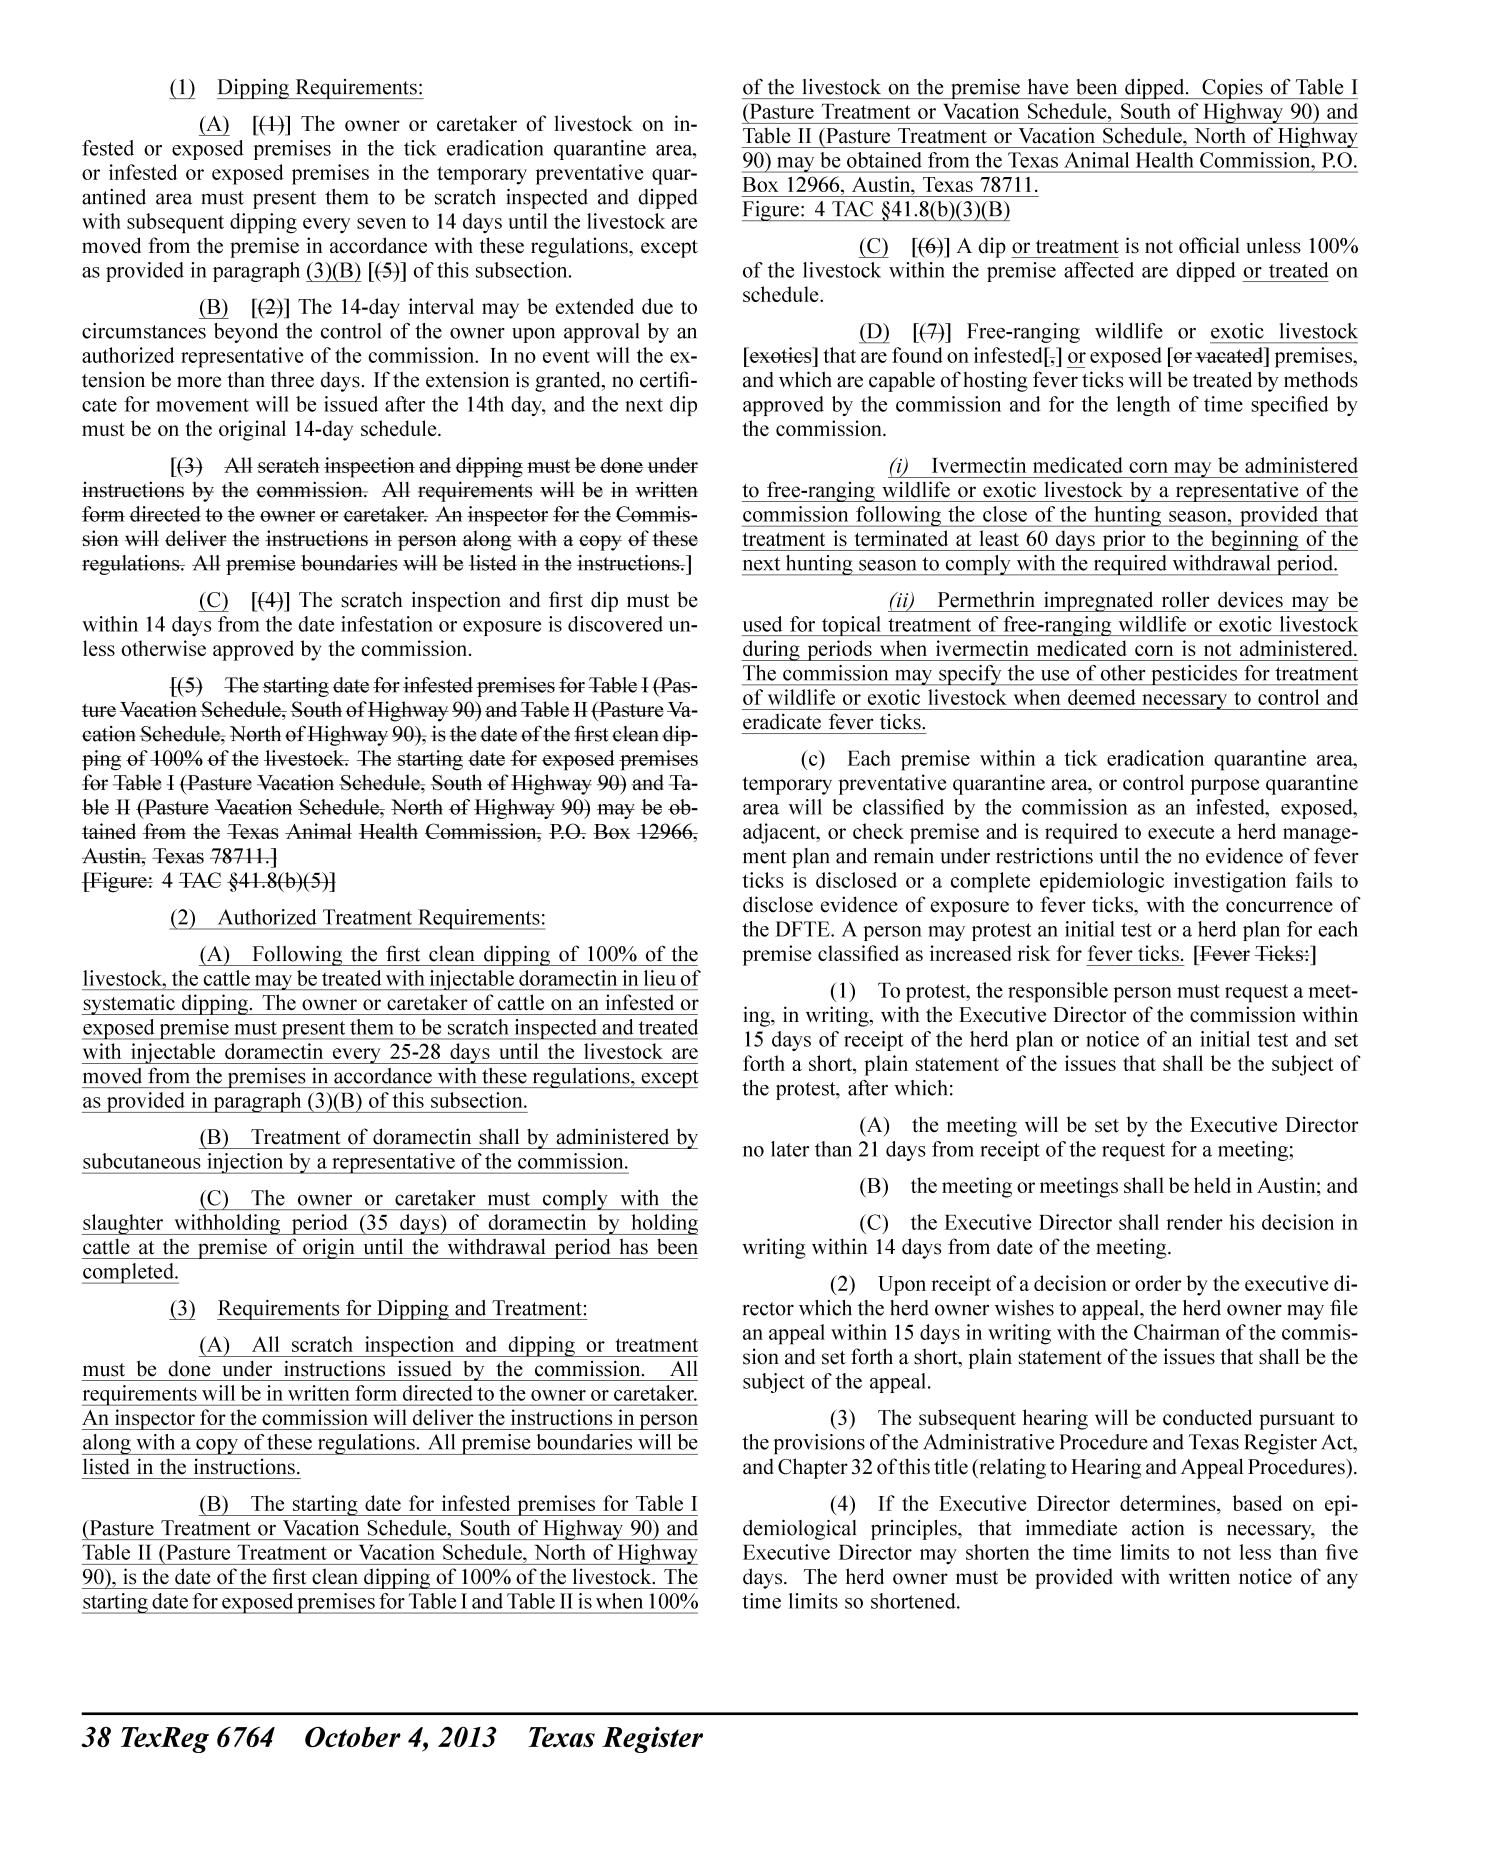 Texas Register, Volume 38, Number 40, Pages 6747-6996, October 4, 2013
                                                
                                                    6764
                                                